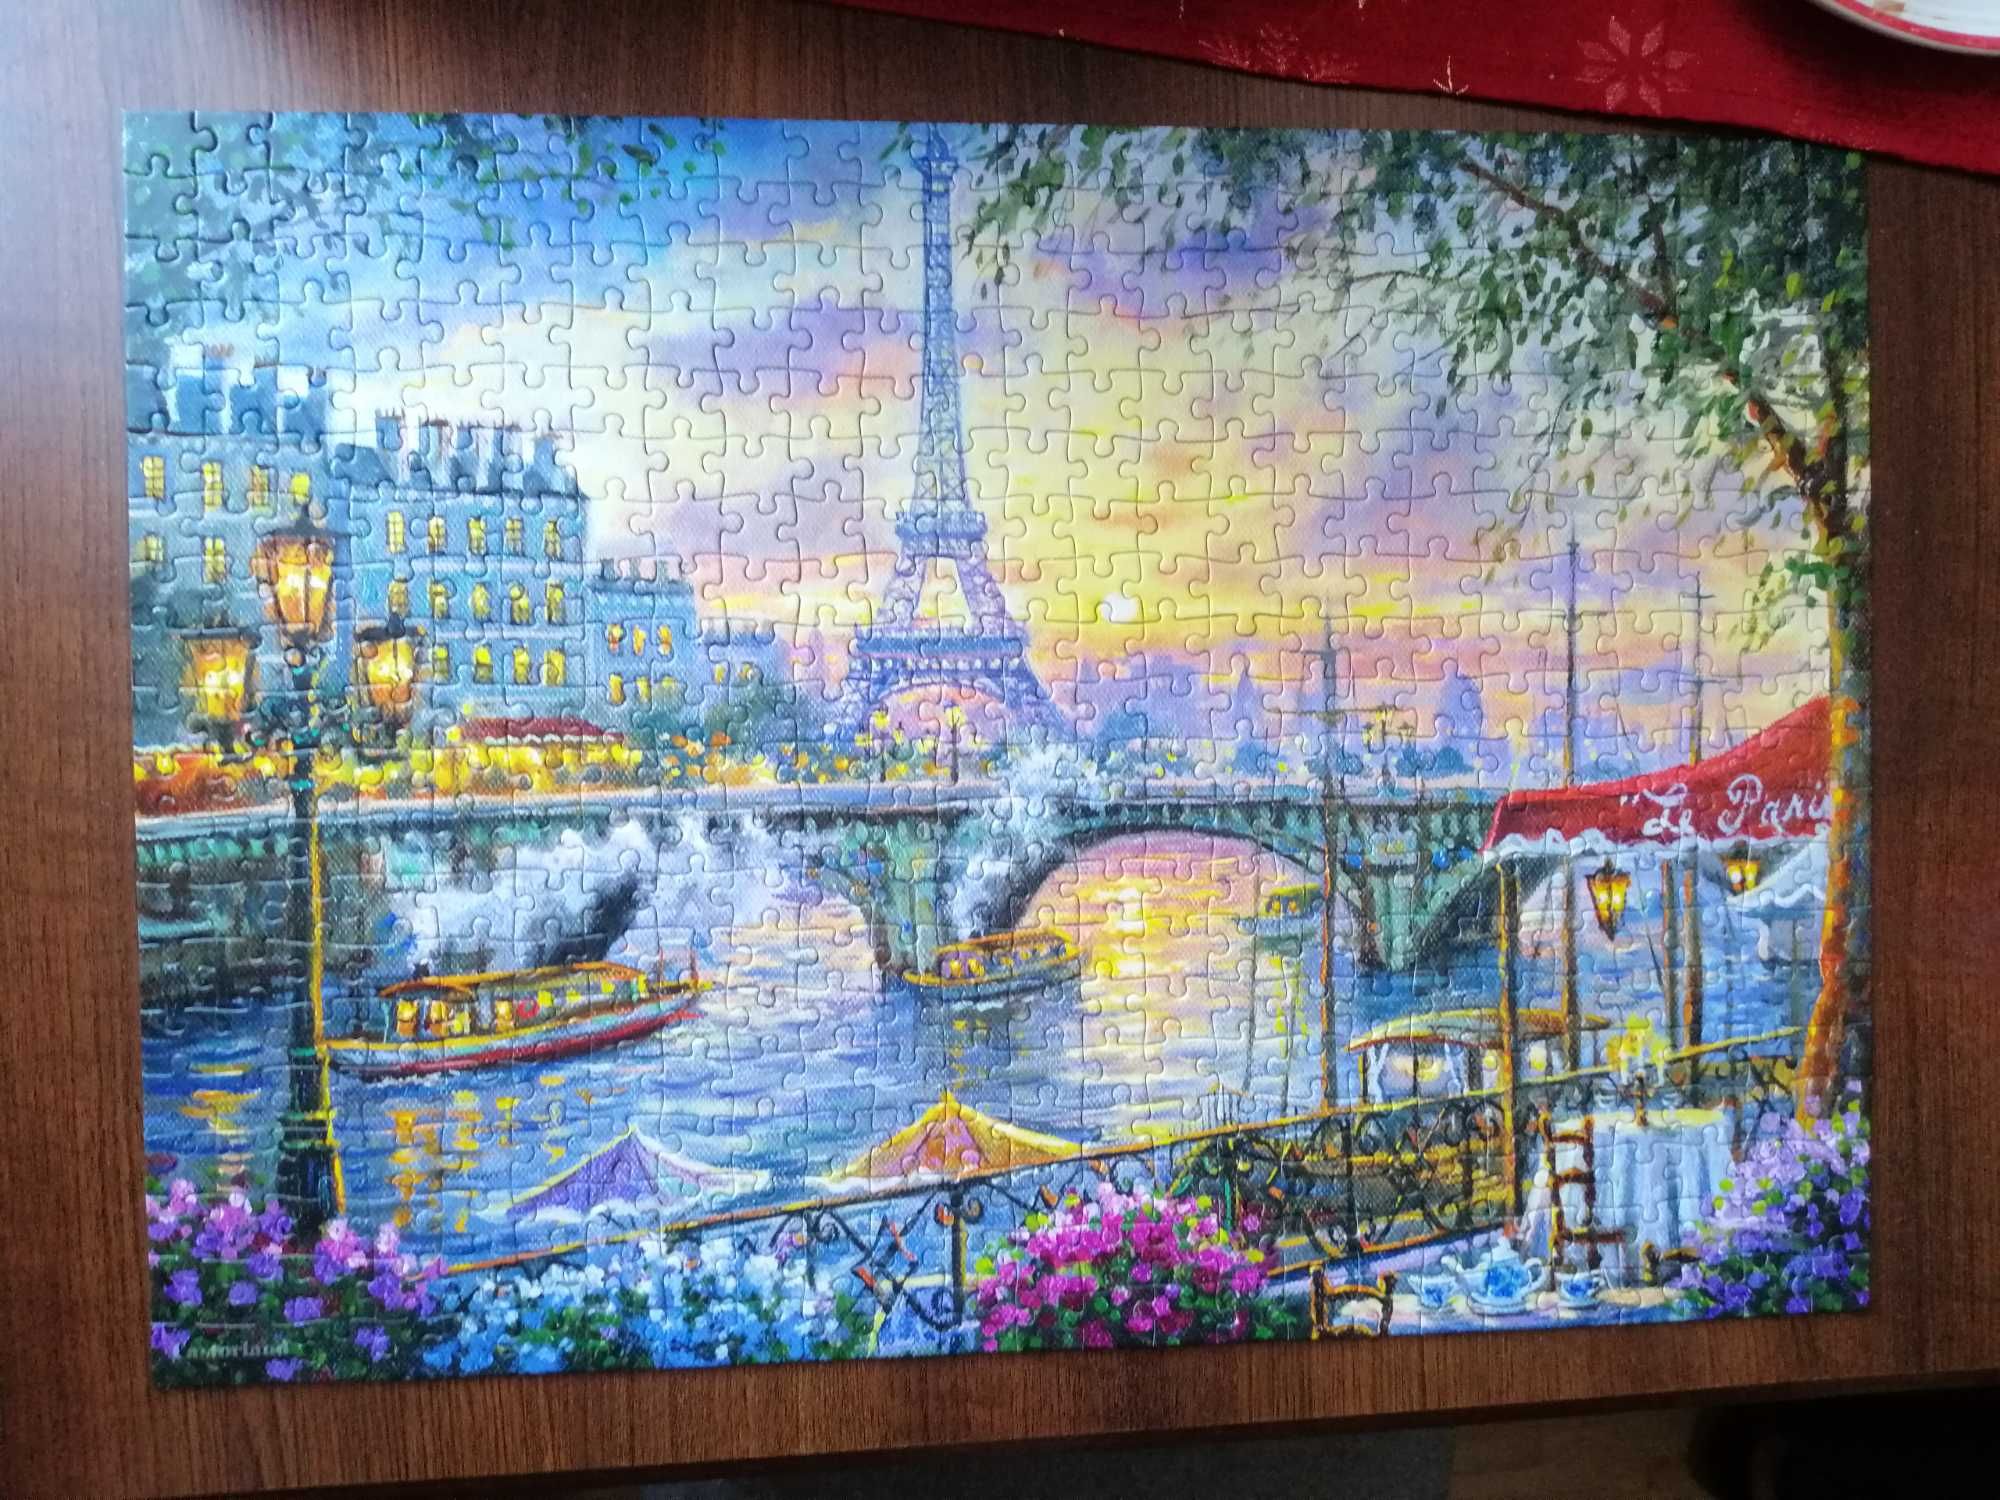 Puzzle Castorland  B-5301   500 Paryż